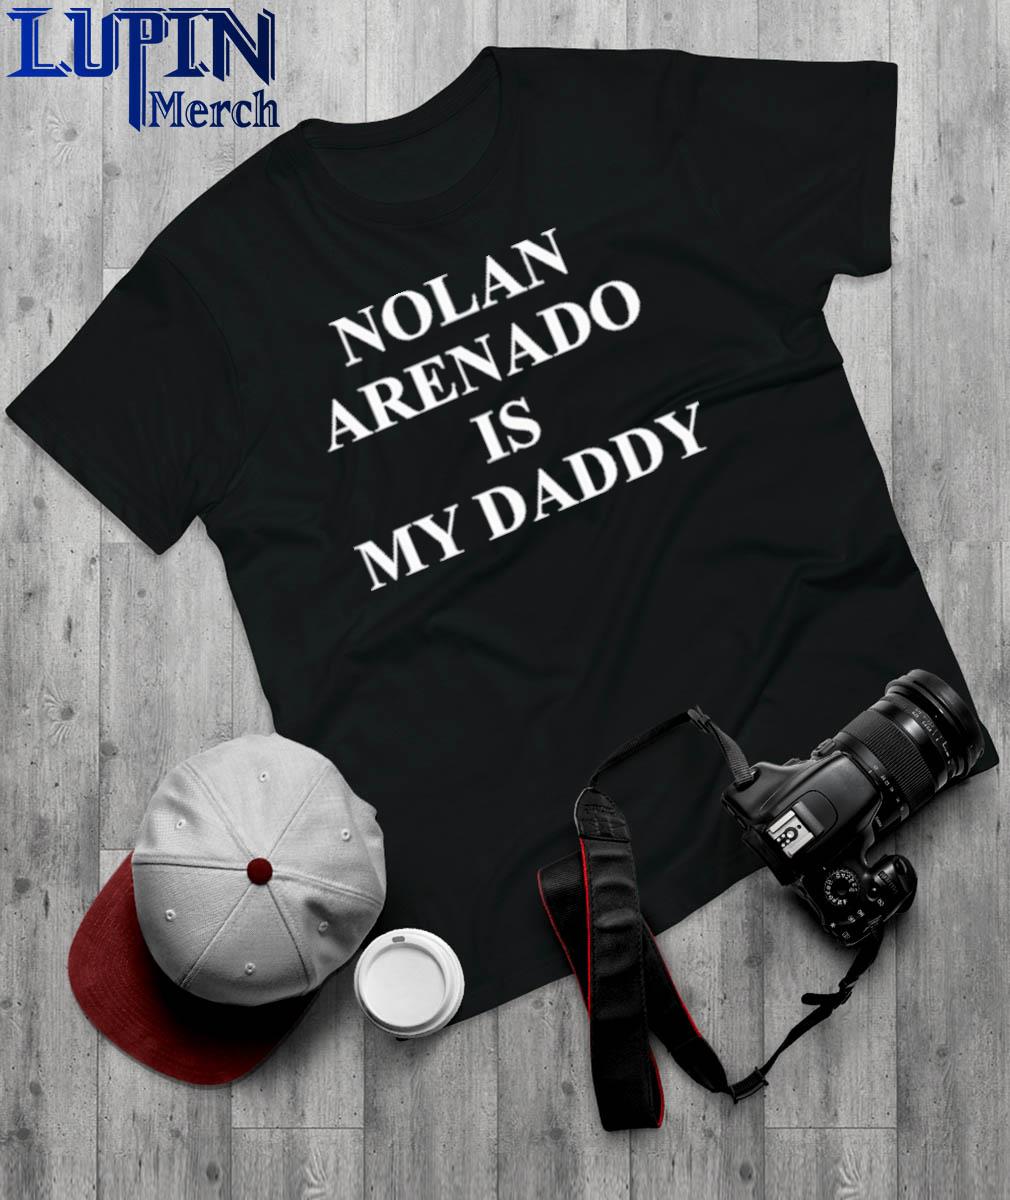 Nolan Arenado Is My Daddy T-shirt